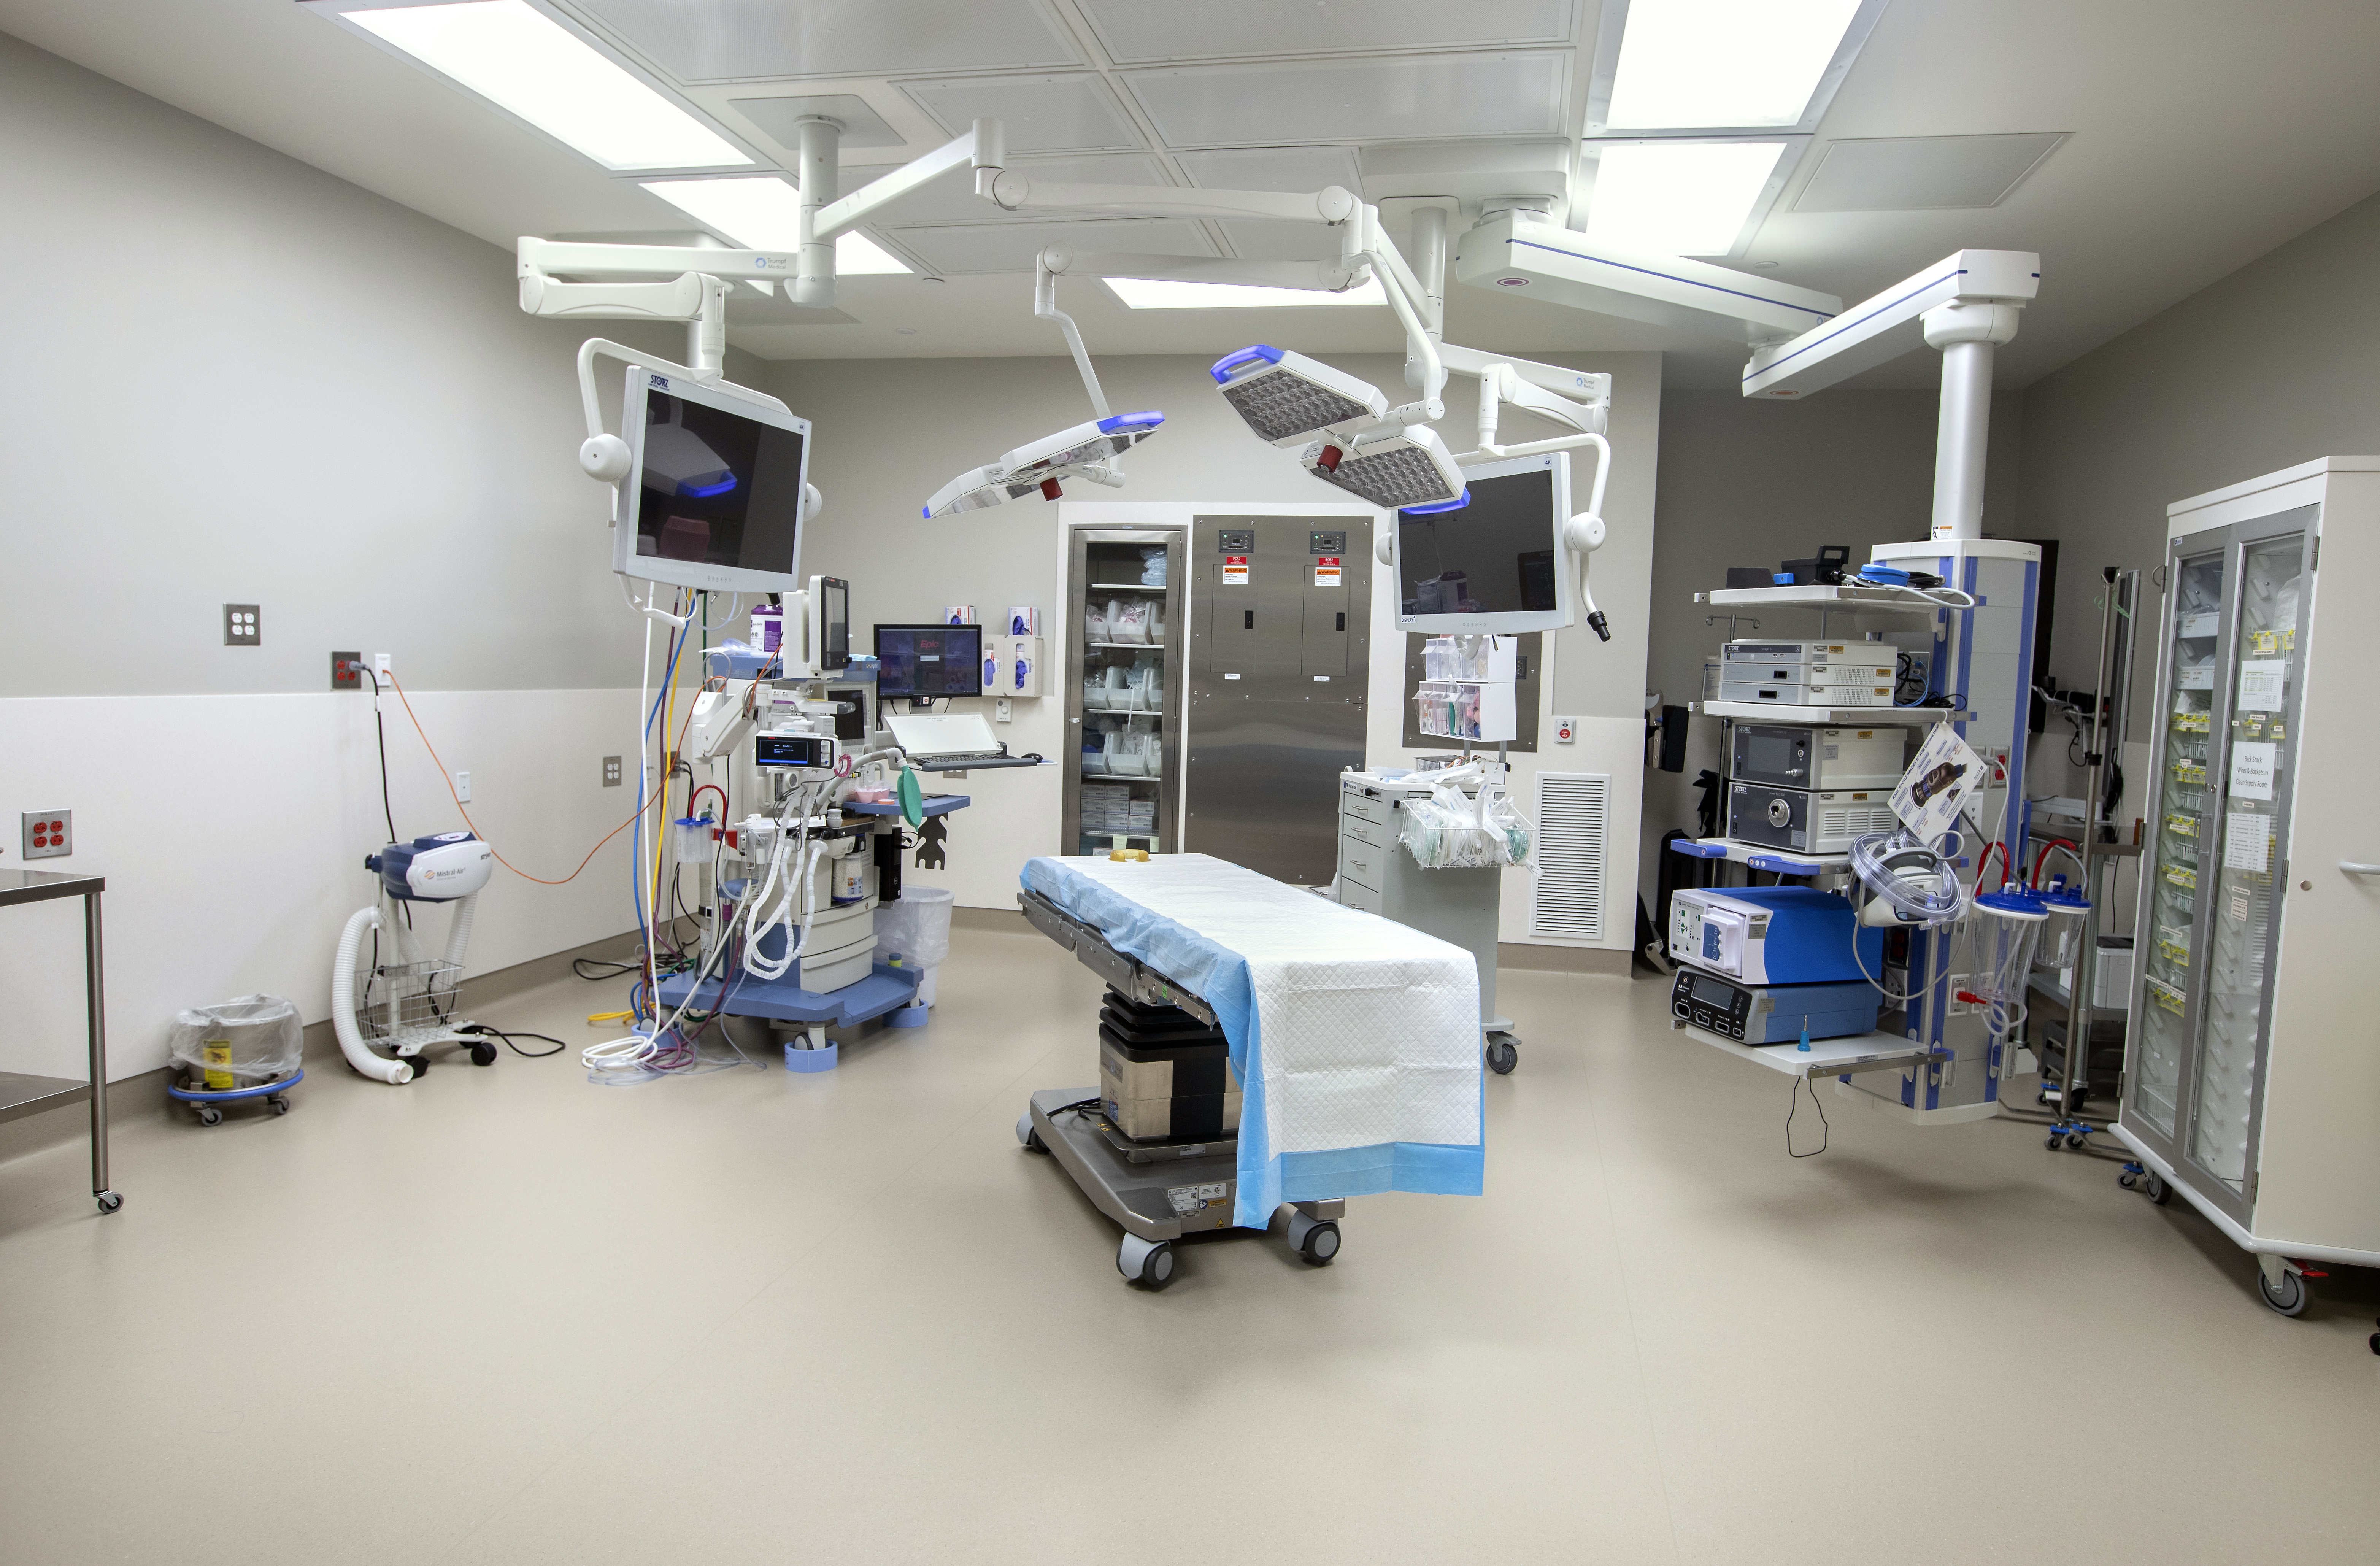 A room at MUSC University Medical Center (Sarah Beck/MUSC)